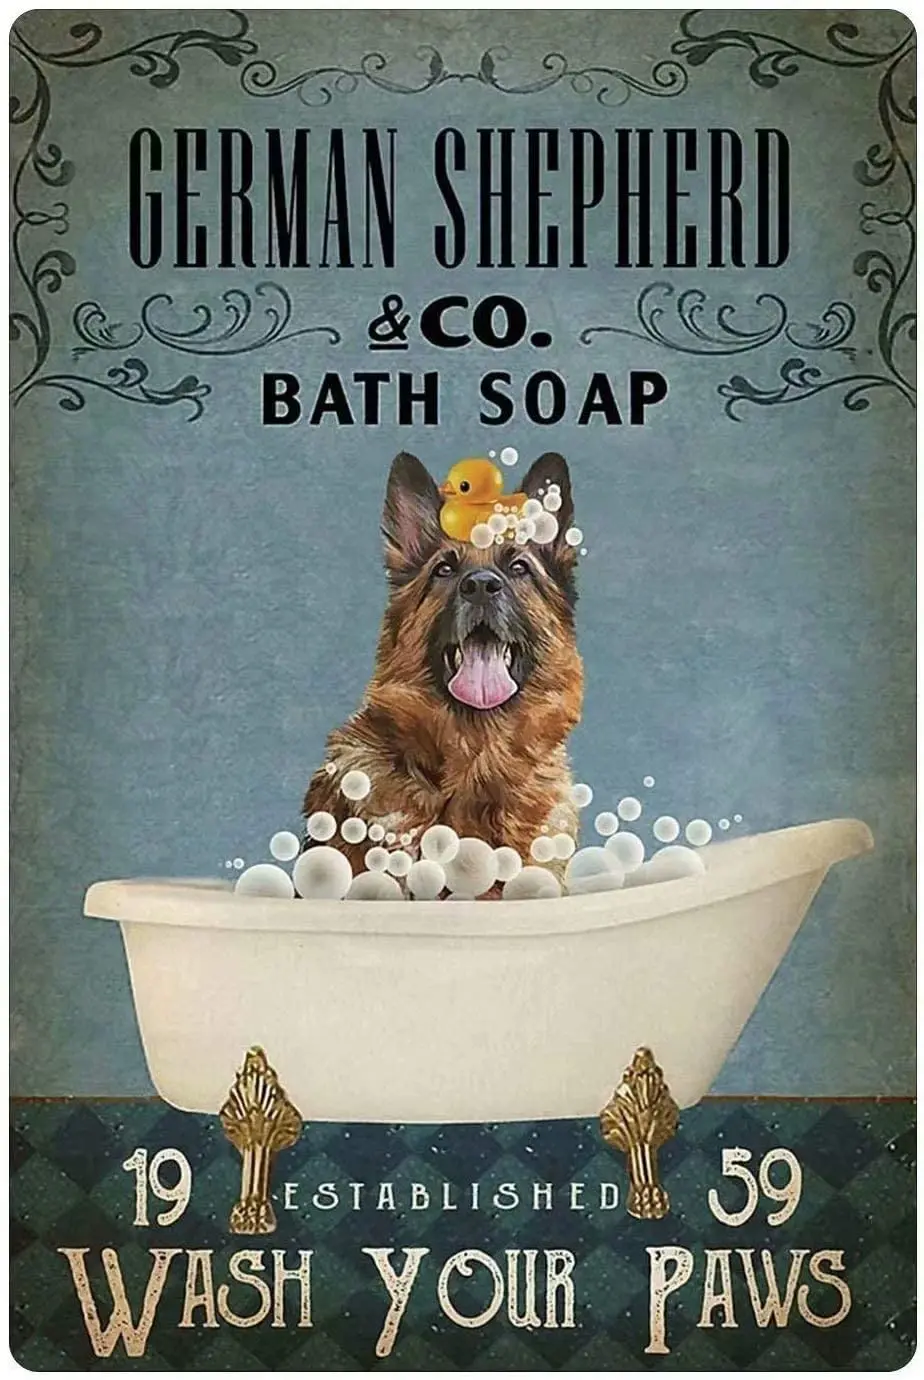 

Vintage dog metal tin sign german shepherd co. bath soap wash your paws printing poster bathroom toilet living room home art